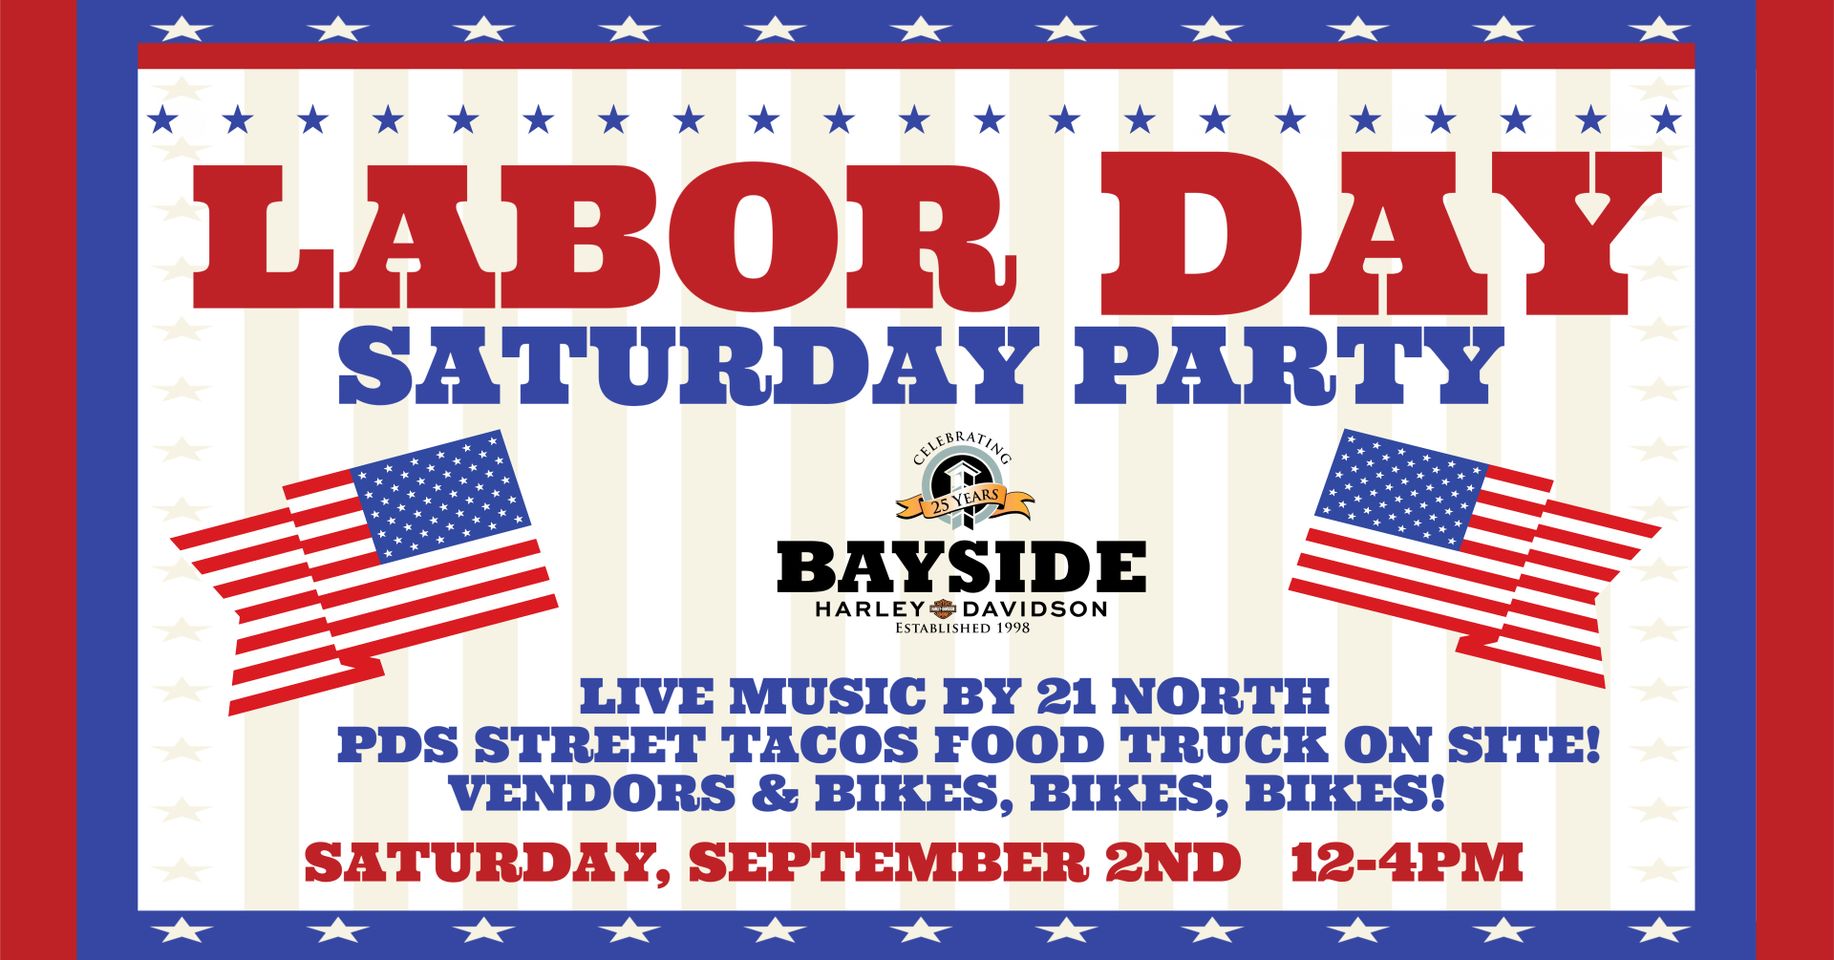 Bayside Harley Davidison Labor Day Event Poster